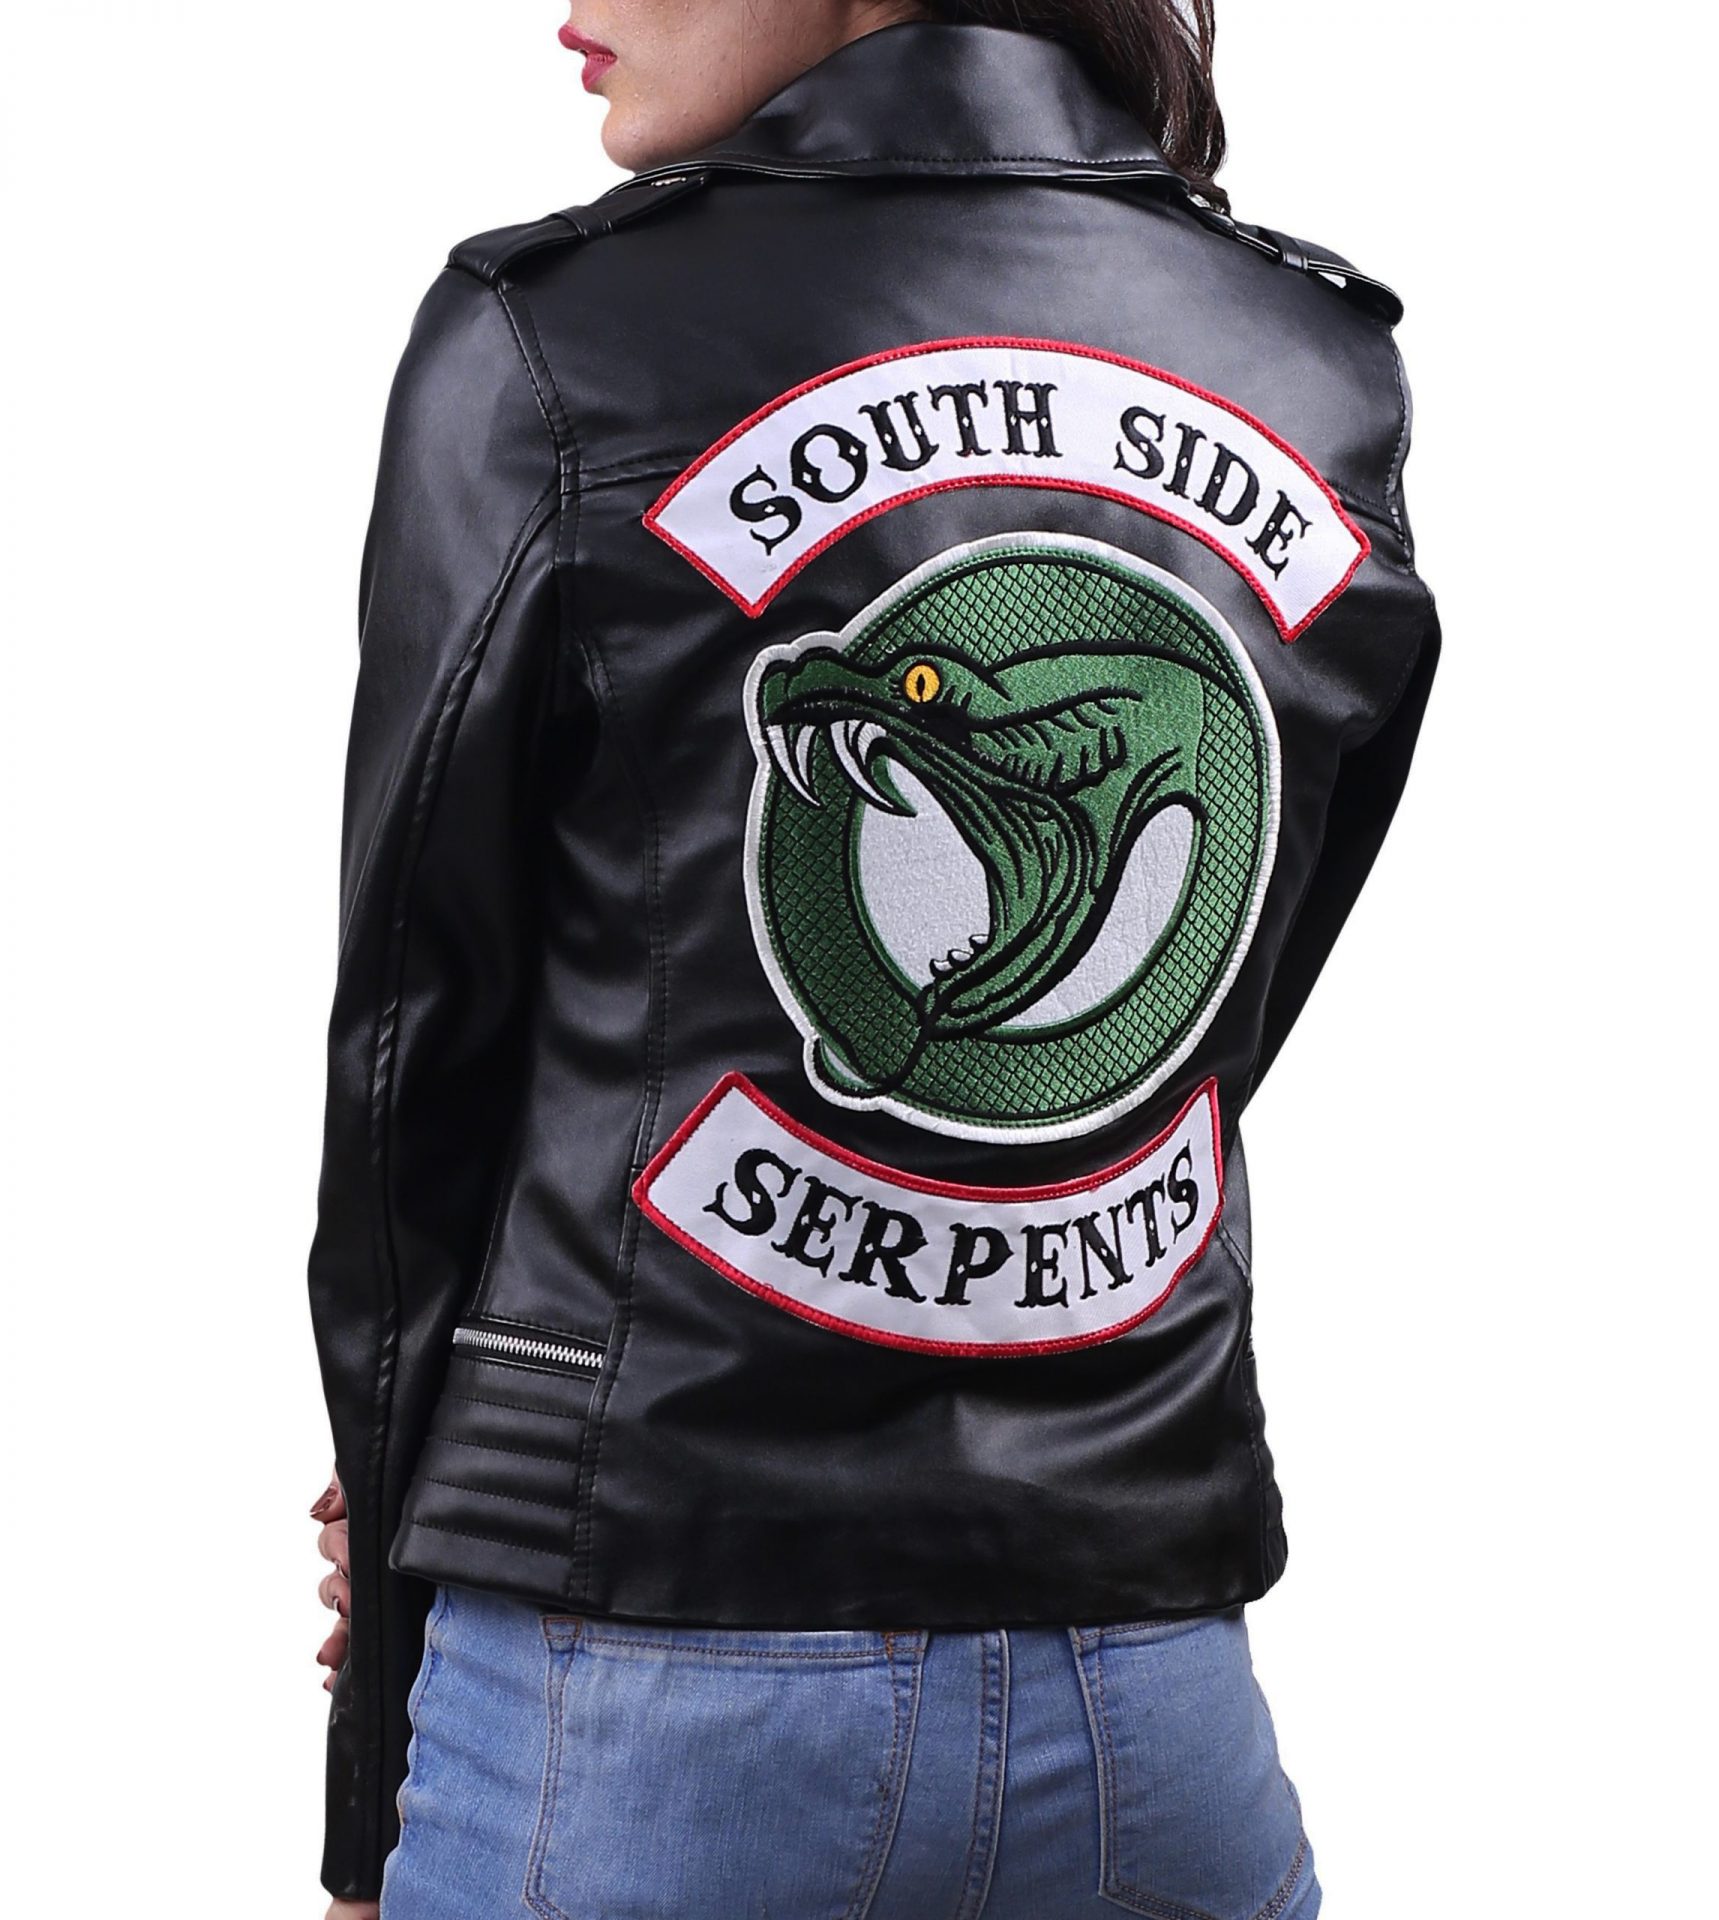 Southside Serpents Leather Jacket